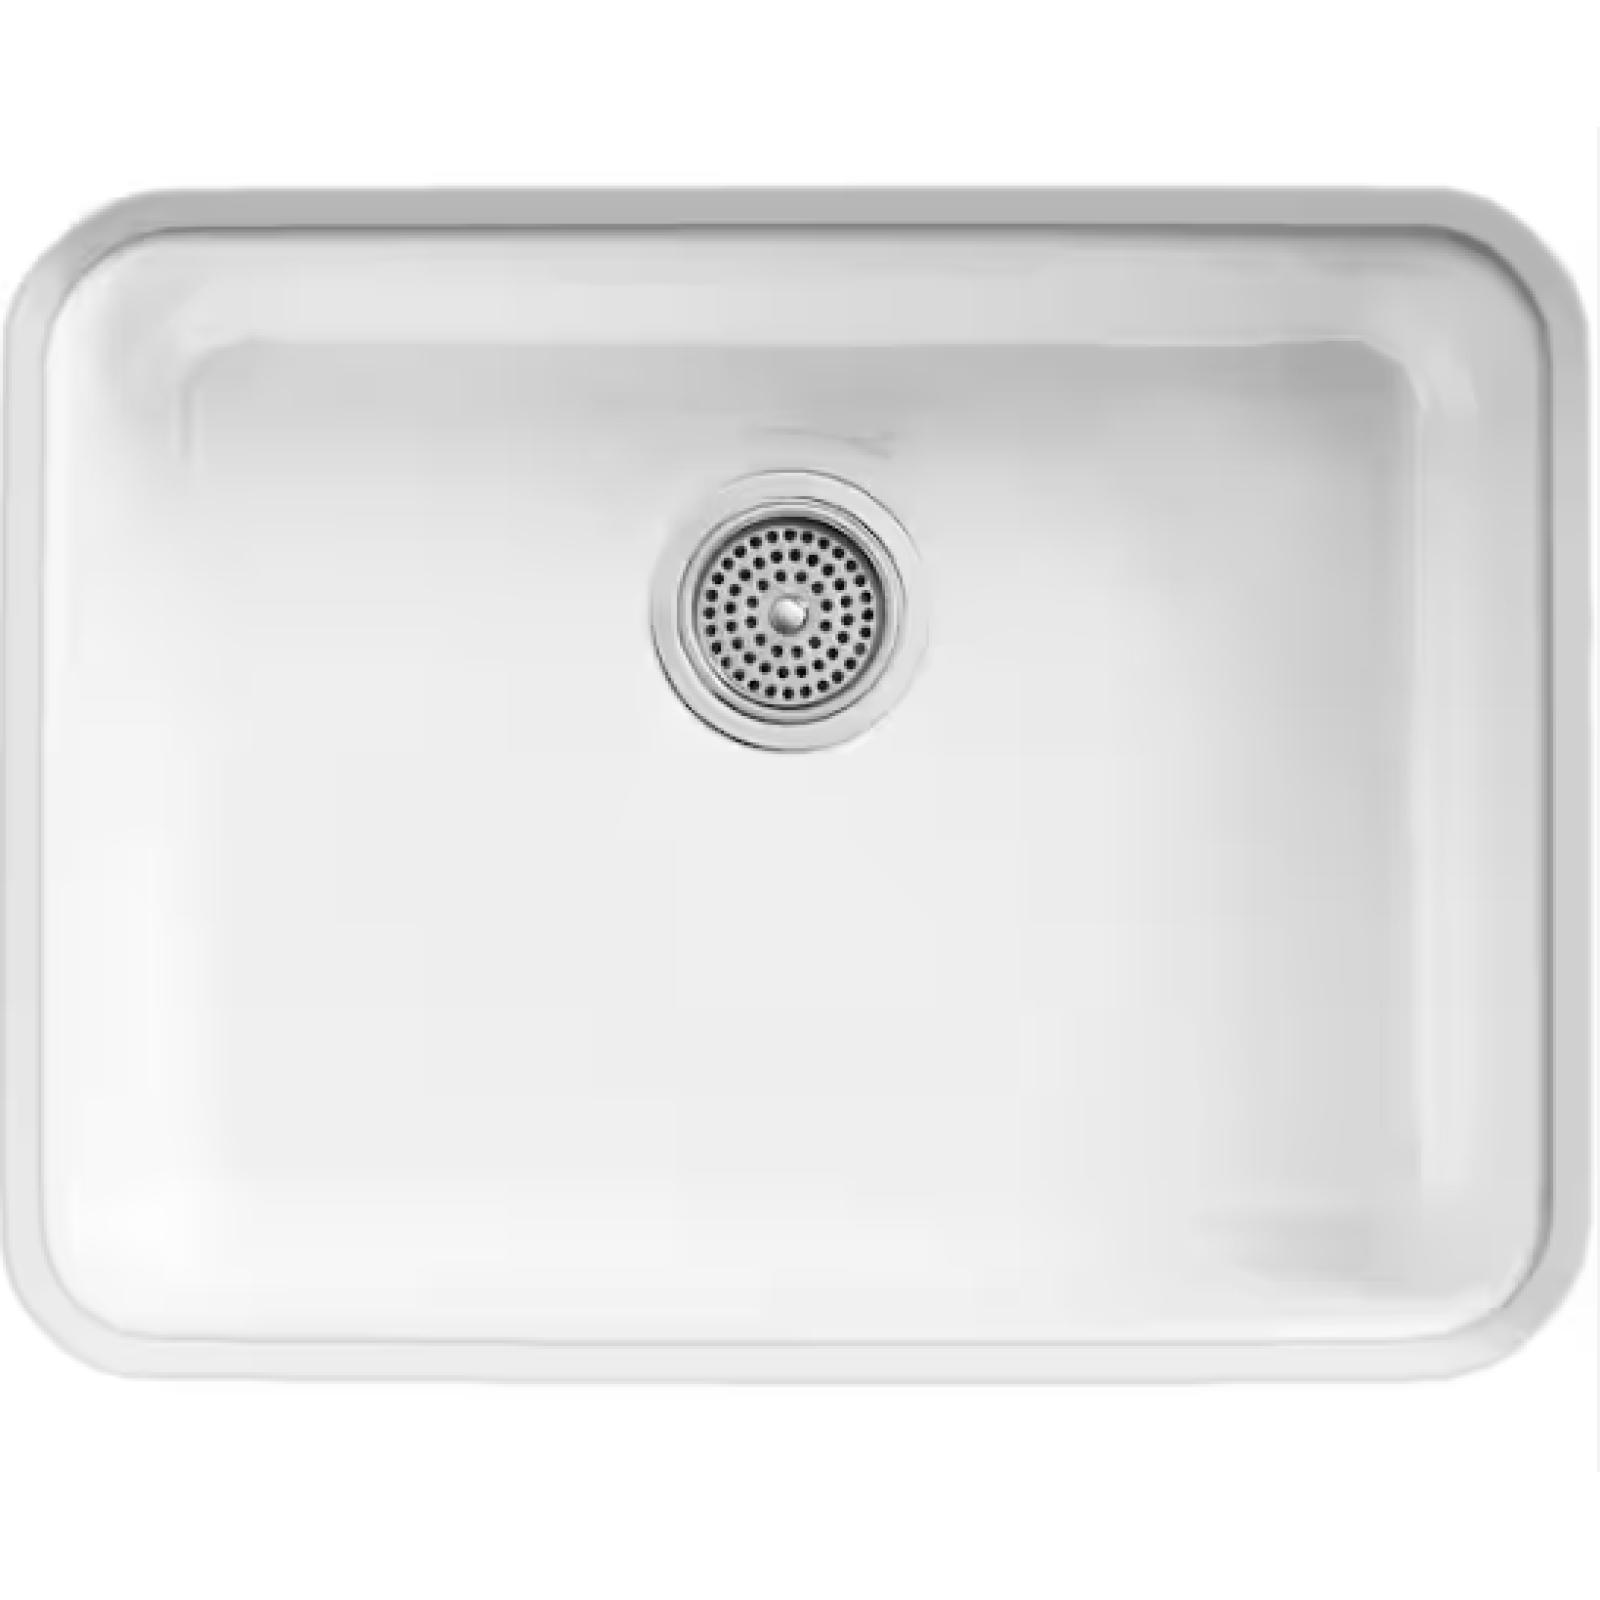 DALLAS LOCATION - KOHLER Iron Tones Dual Mount Cast Iron 24 in. Single Bowl Kitchen Sink in White PALLET - (6 UNITS)